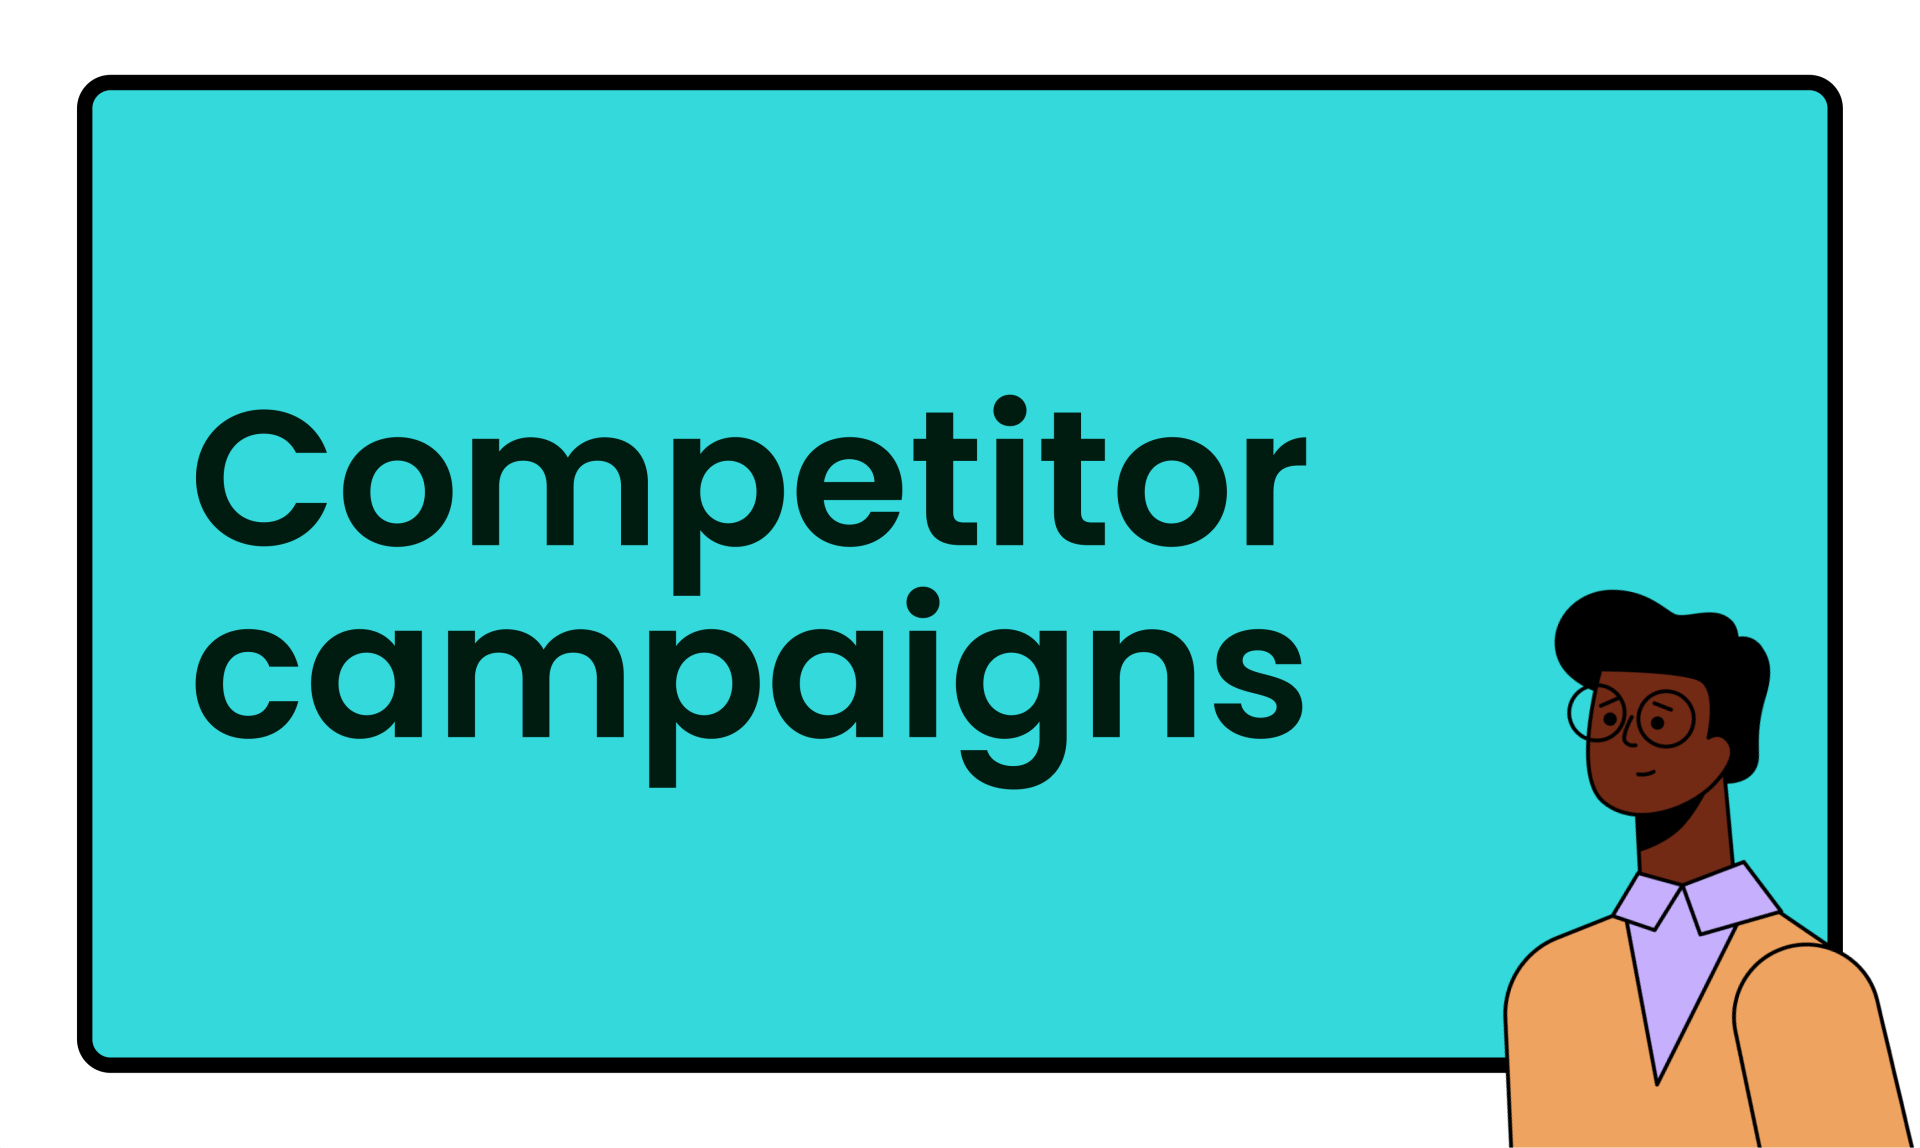 Competitor Campaigns